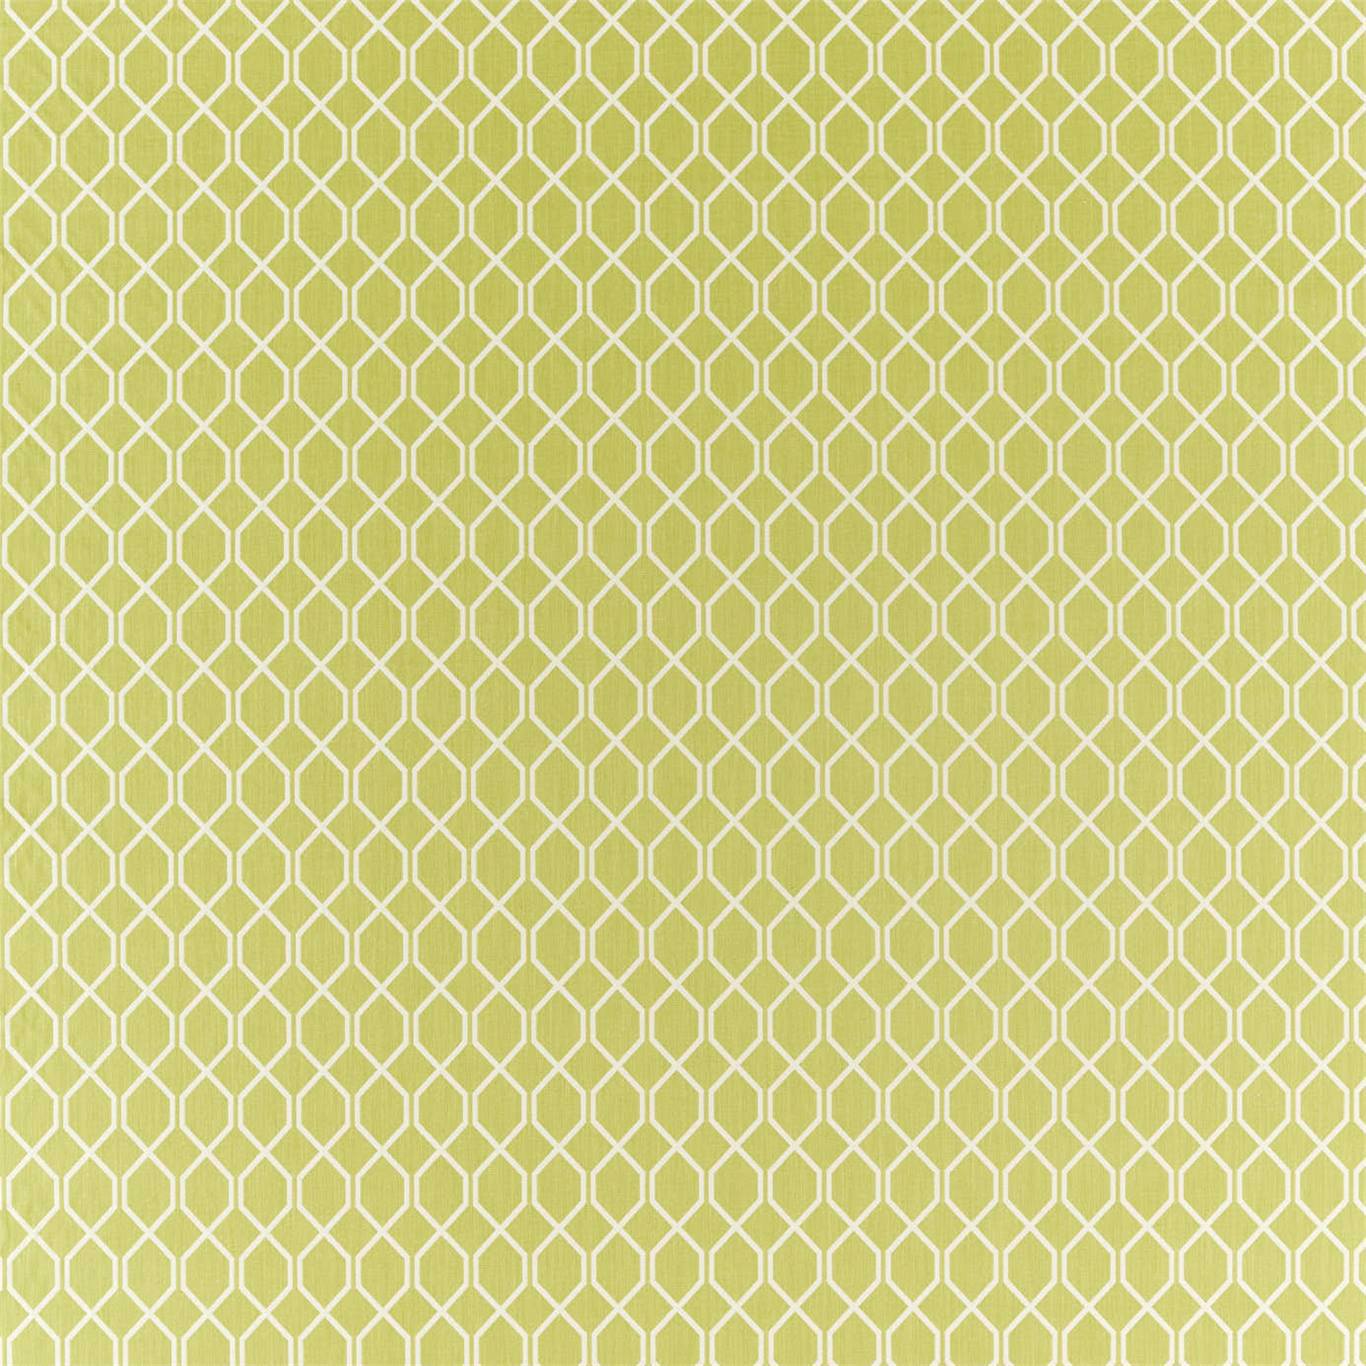 Botanic Trellis Fabric by Sanderson - DLNC236790 - Lime